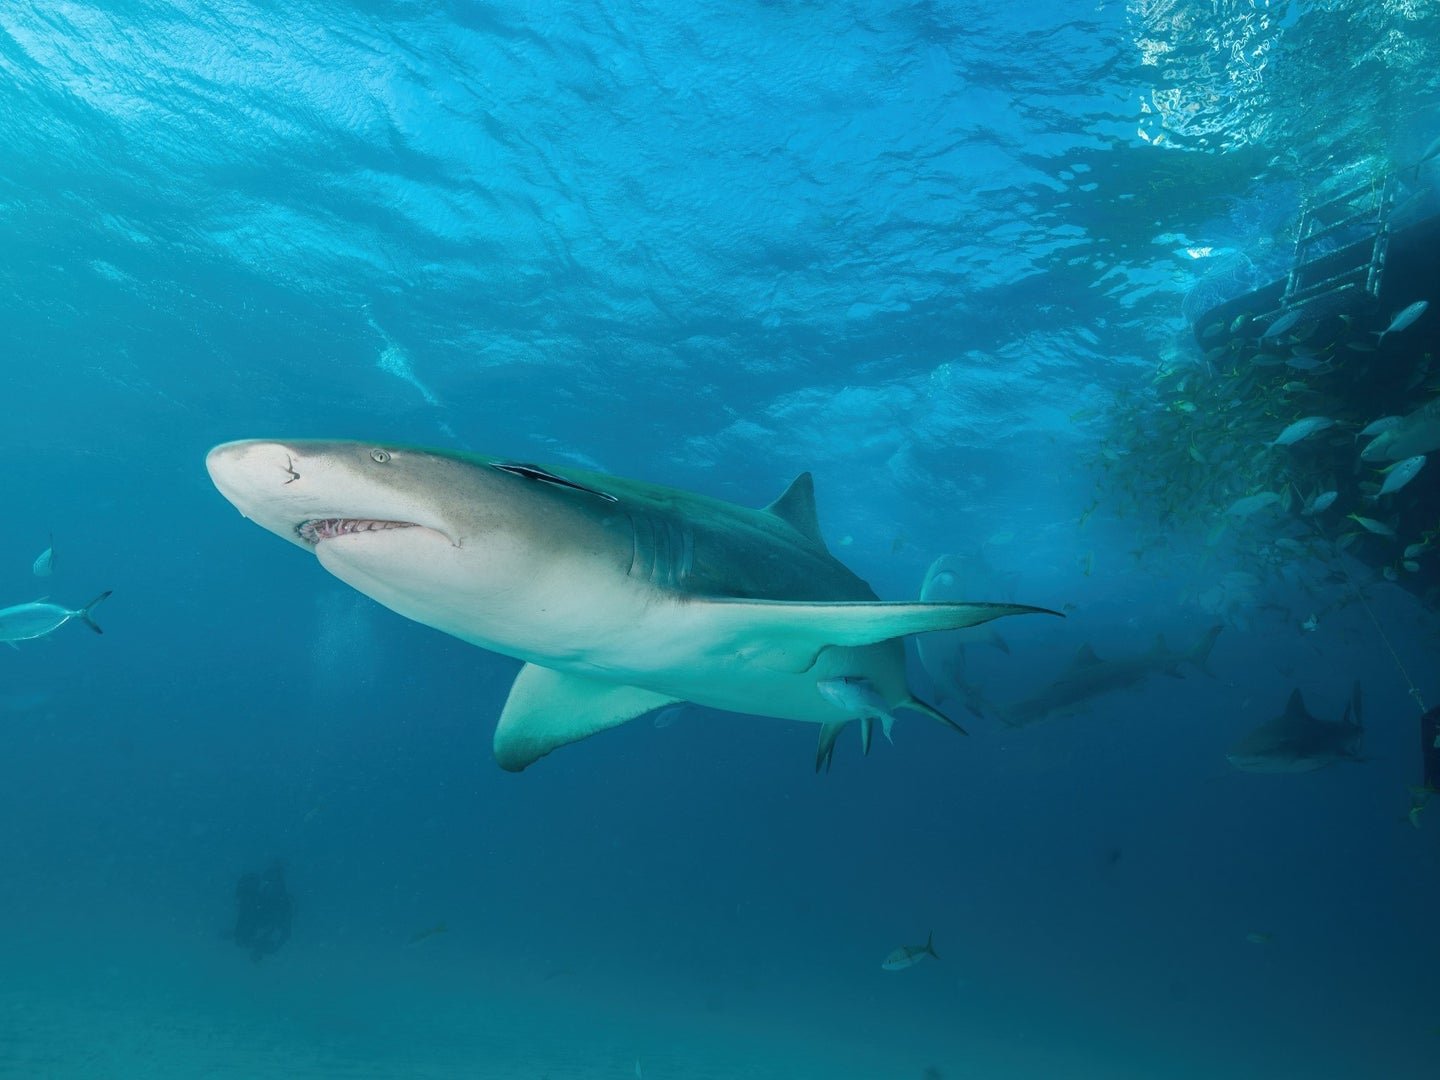 Sharks have a sixth sense for navigating the seas